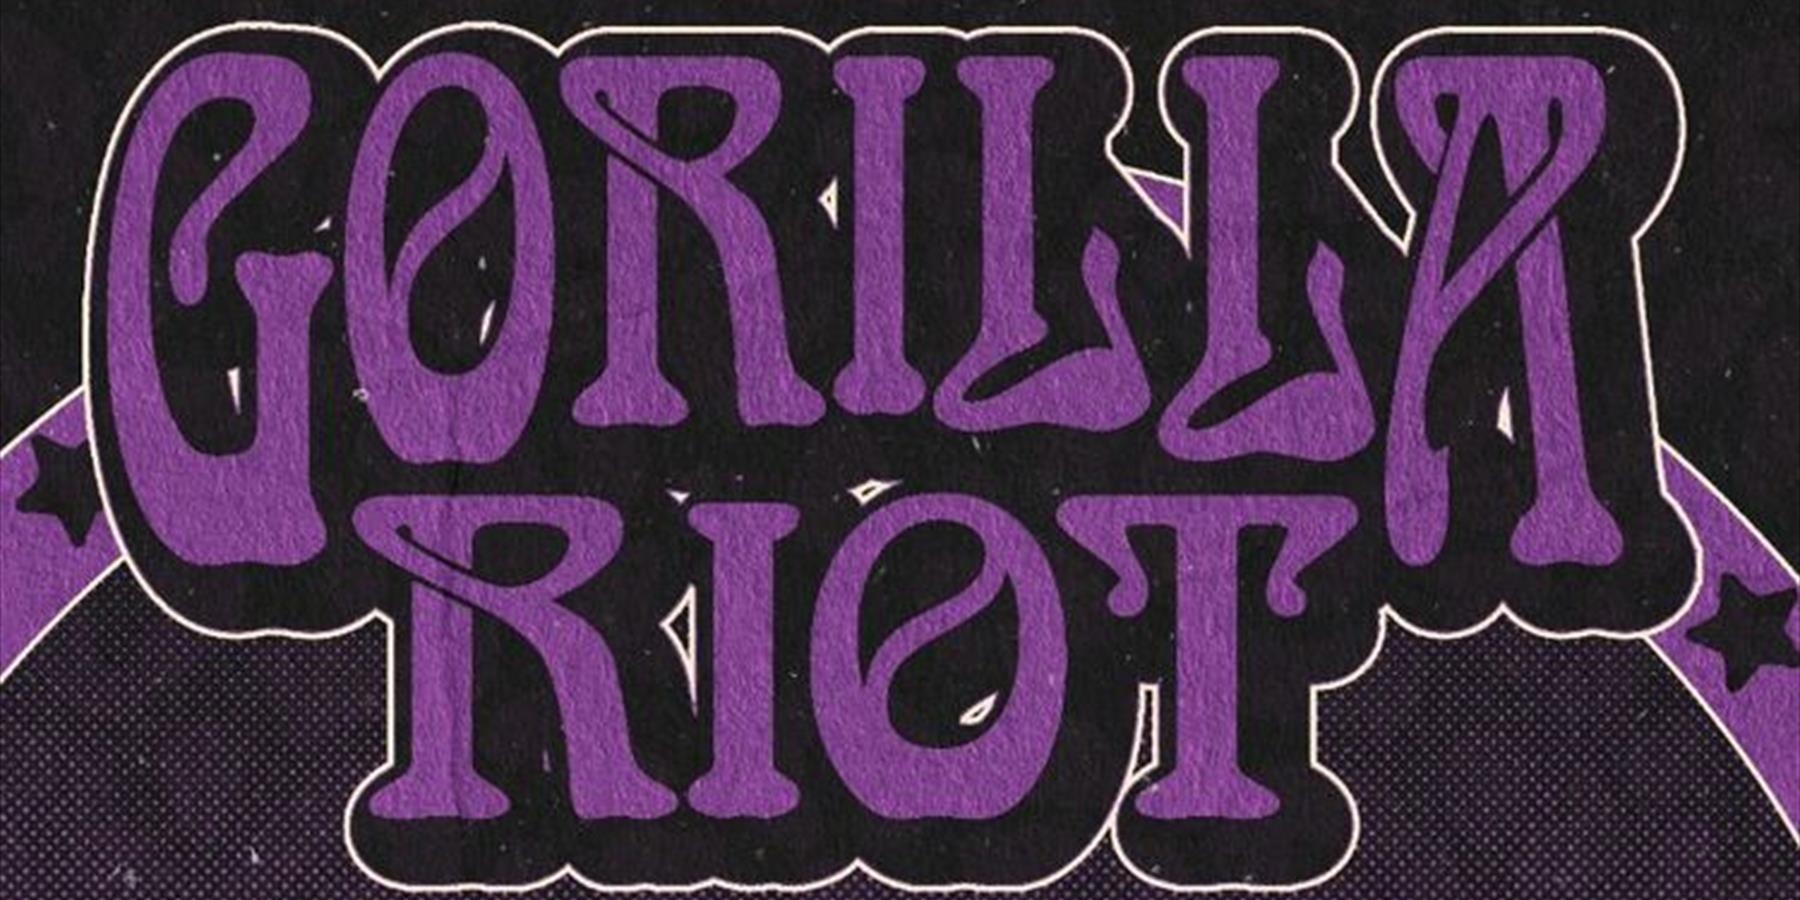 Gorilla Riot "stripped"